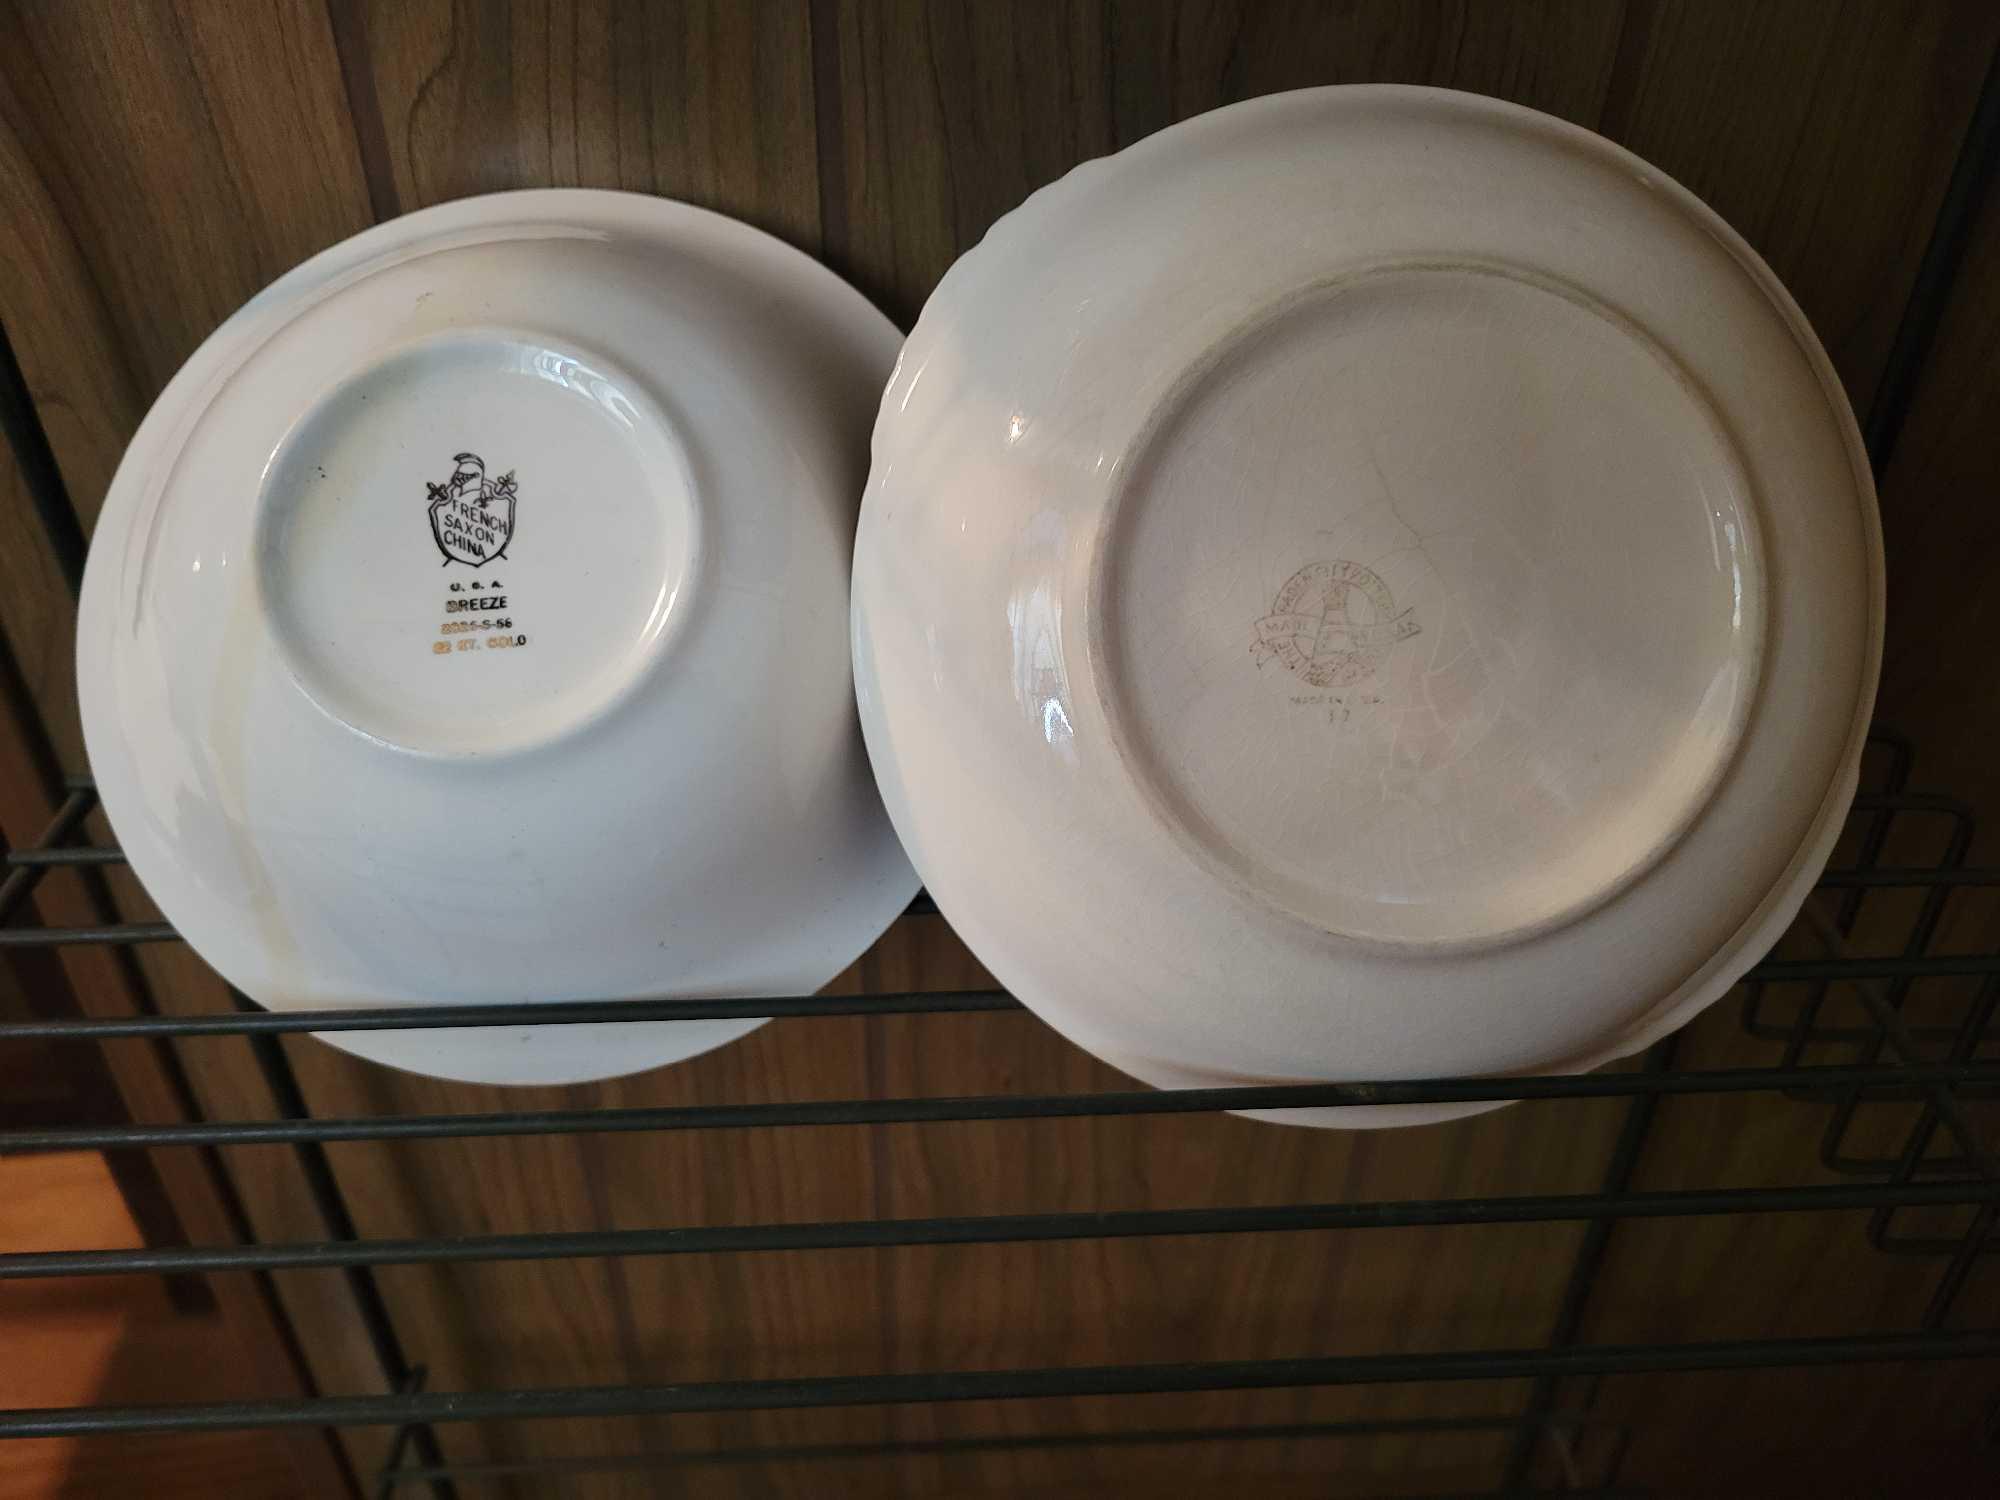 Vintage Dishes Bowls Mugs Candy Dish